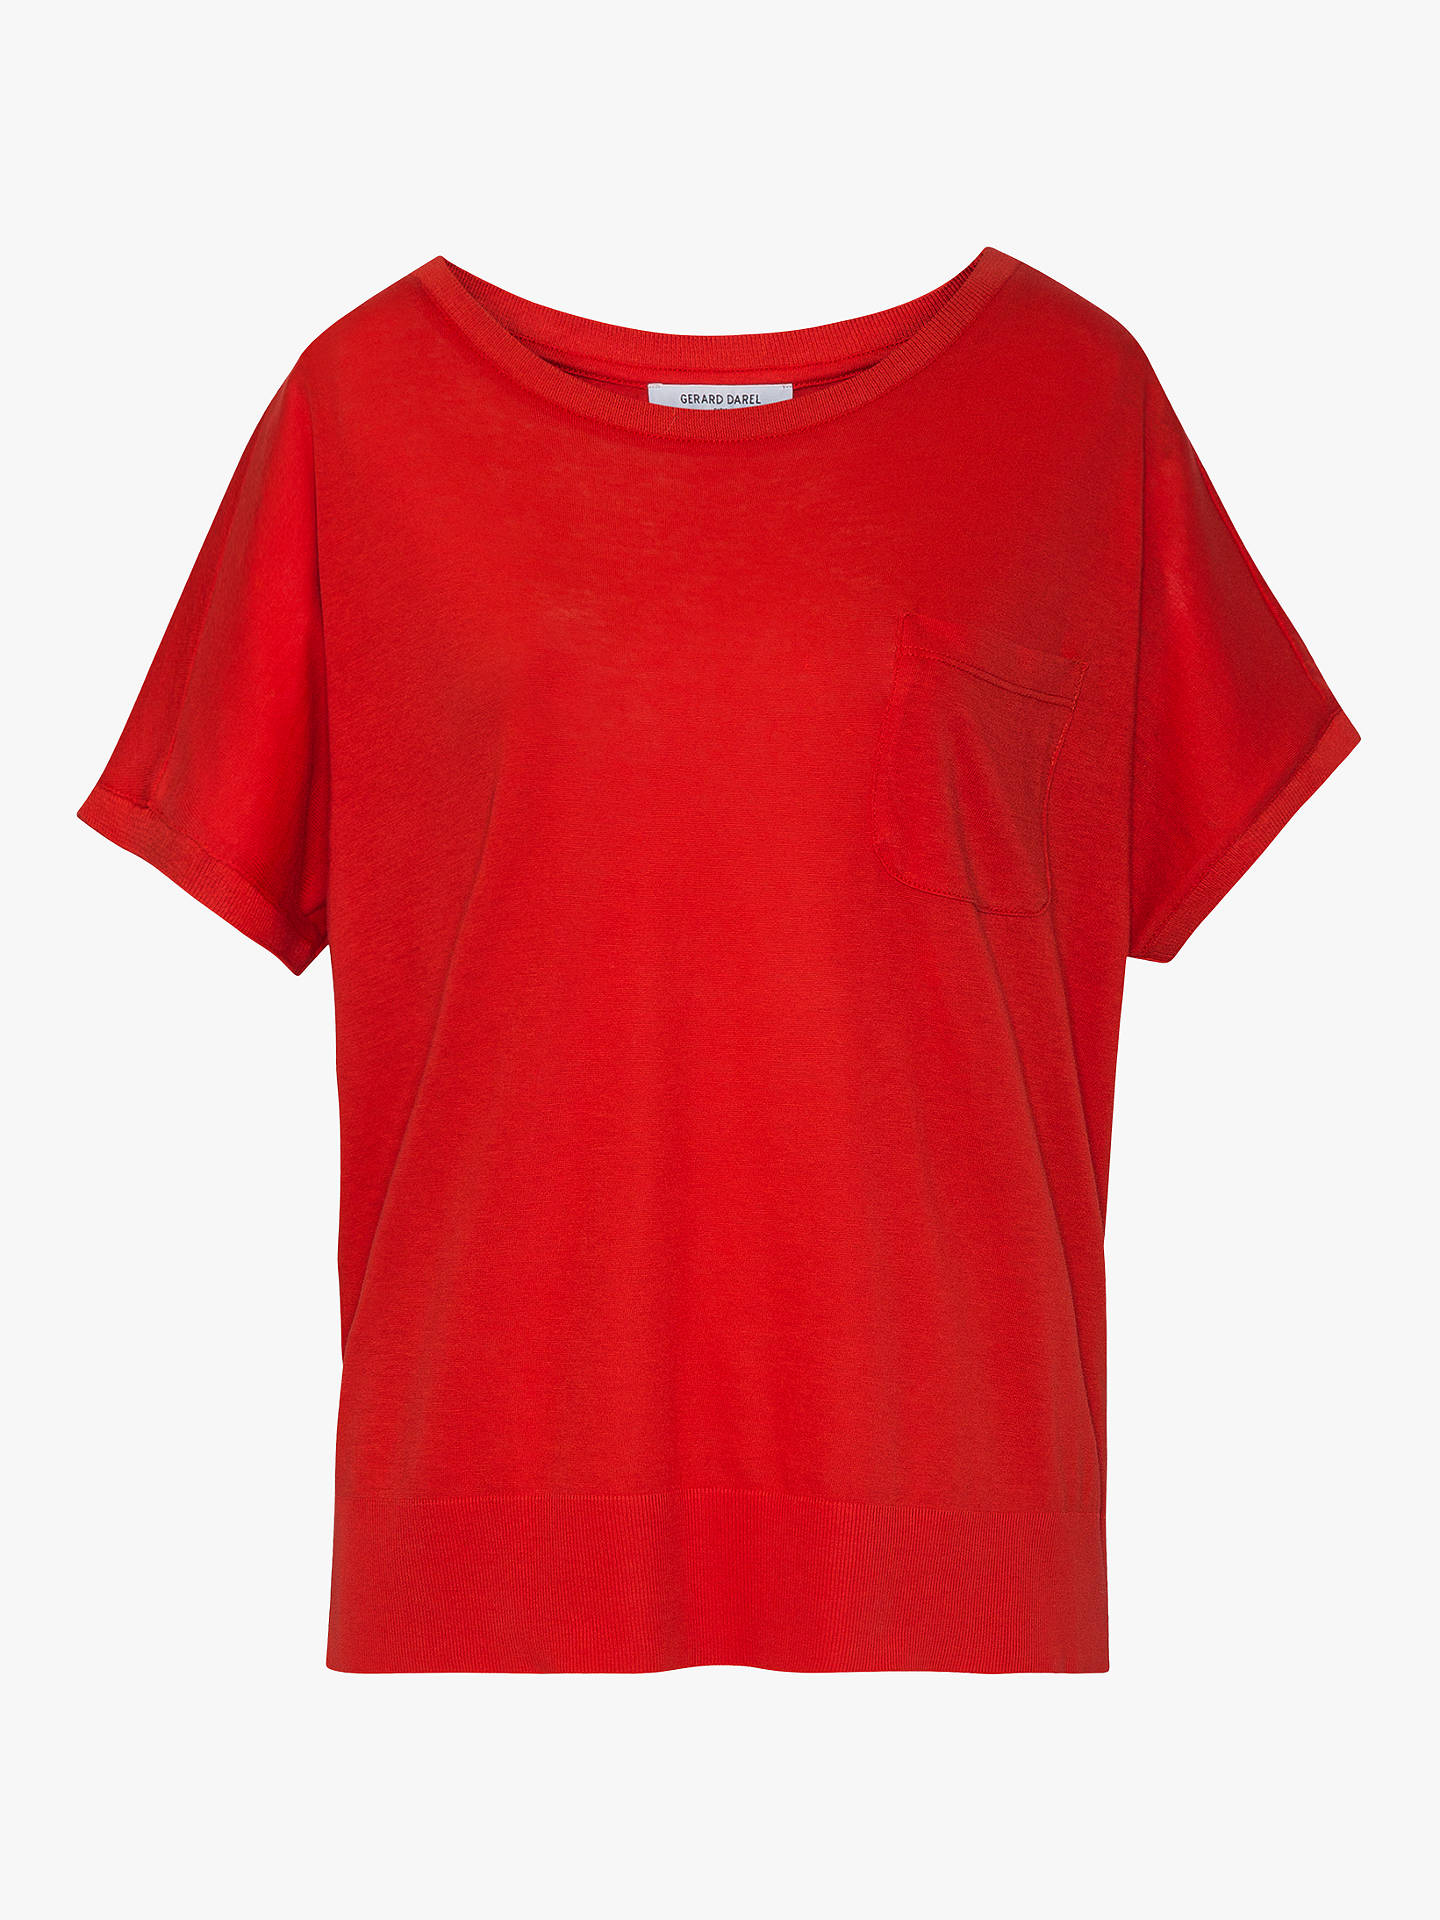 Gerard Darel Veronica Cotton T-Shirt, Red at John Lewis & Partners